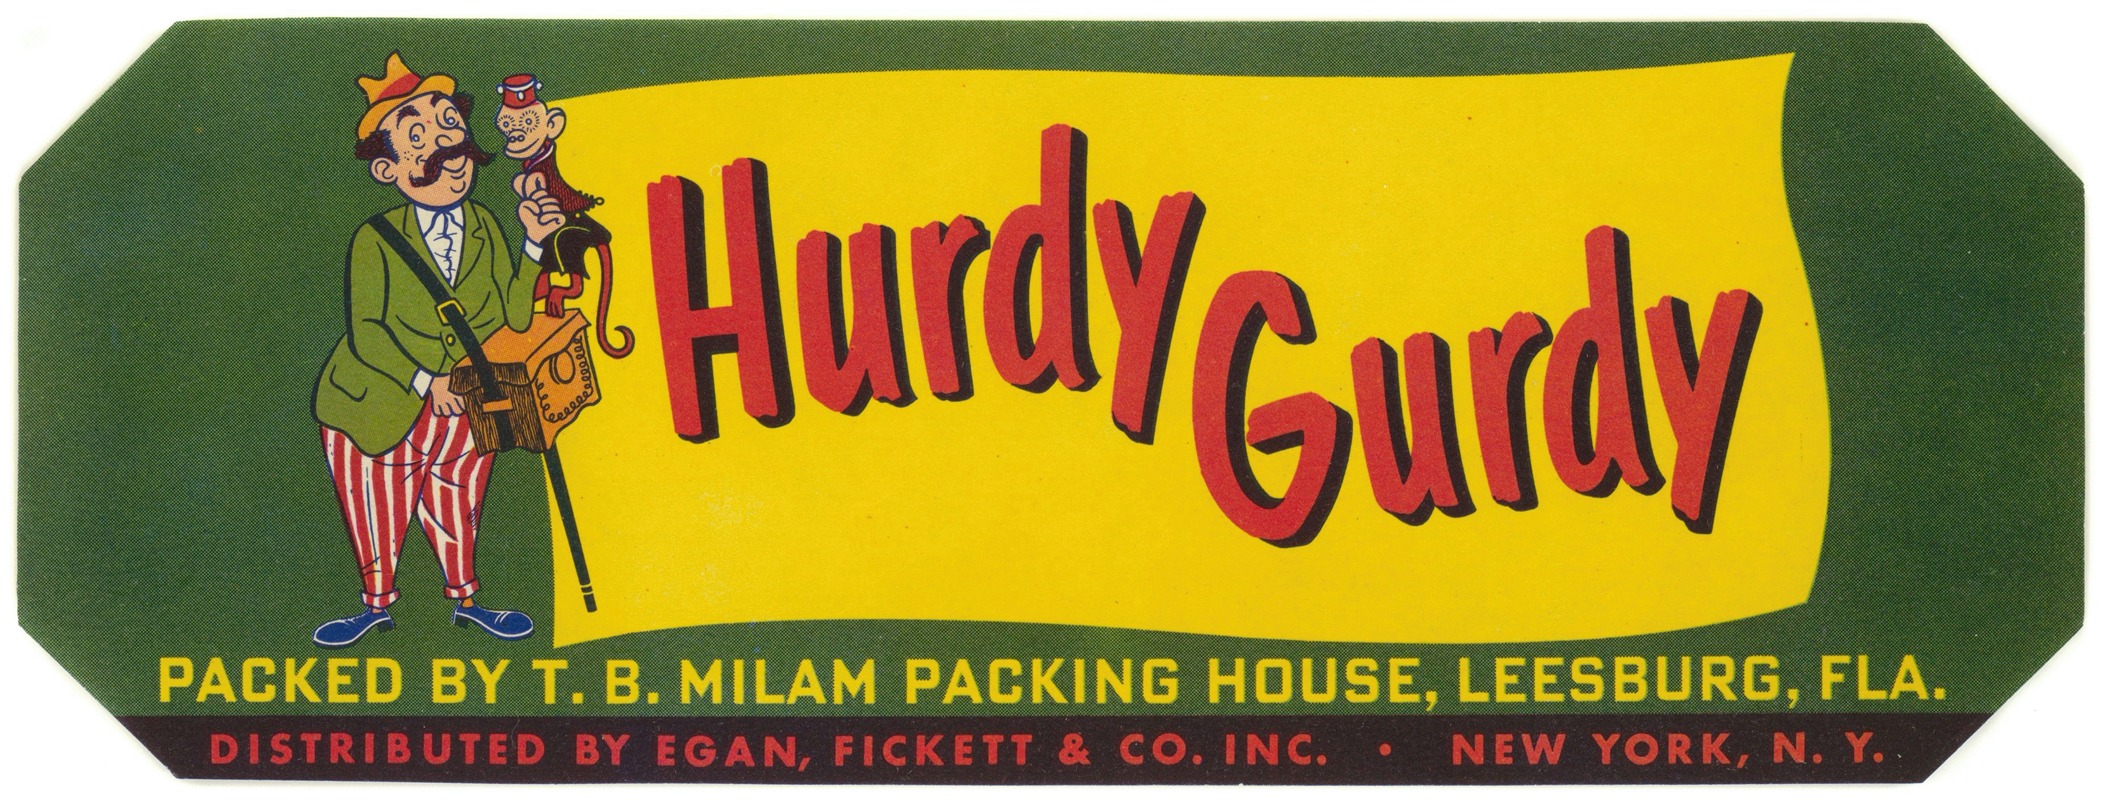 Anonymous - Hurdy Gurdy Produce Label